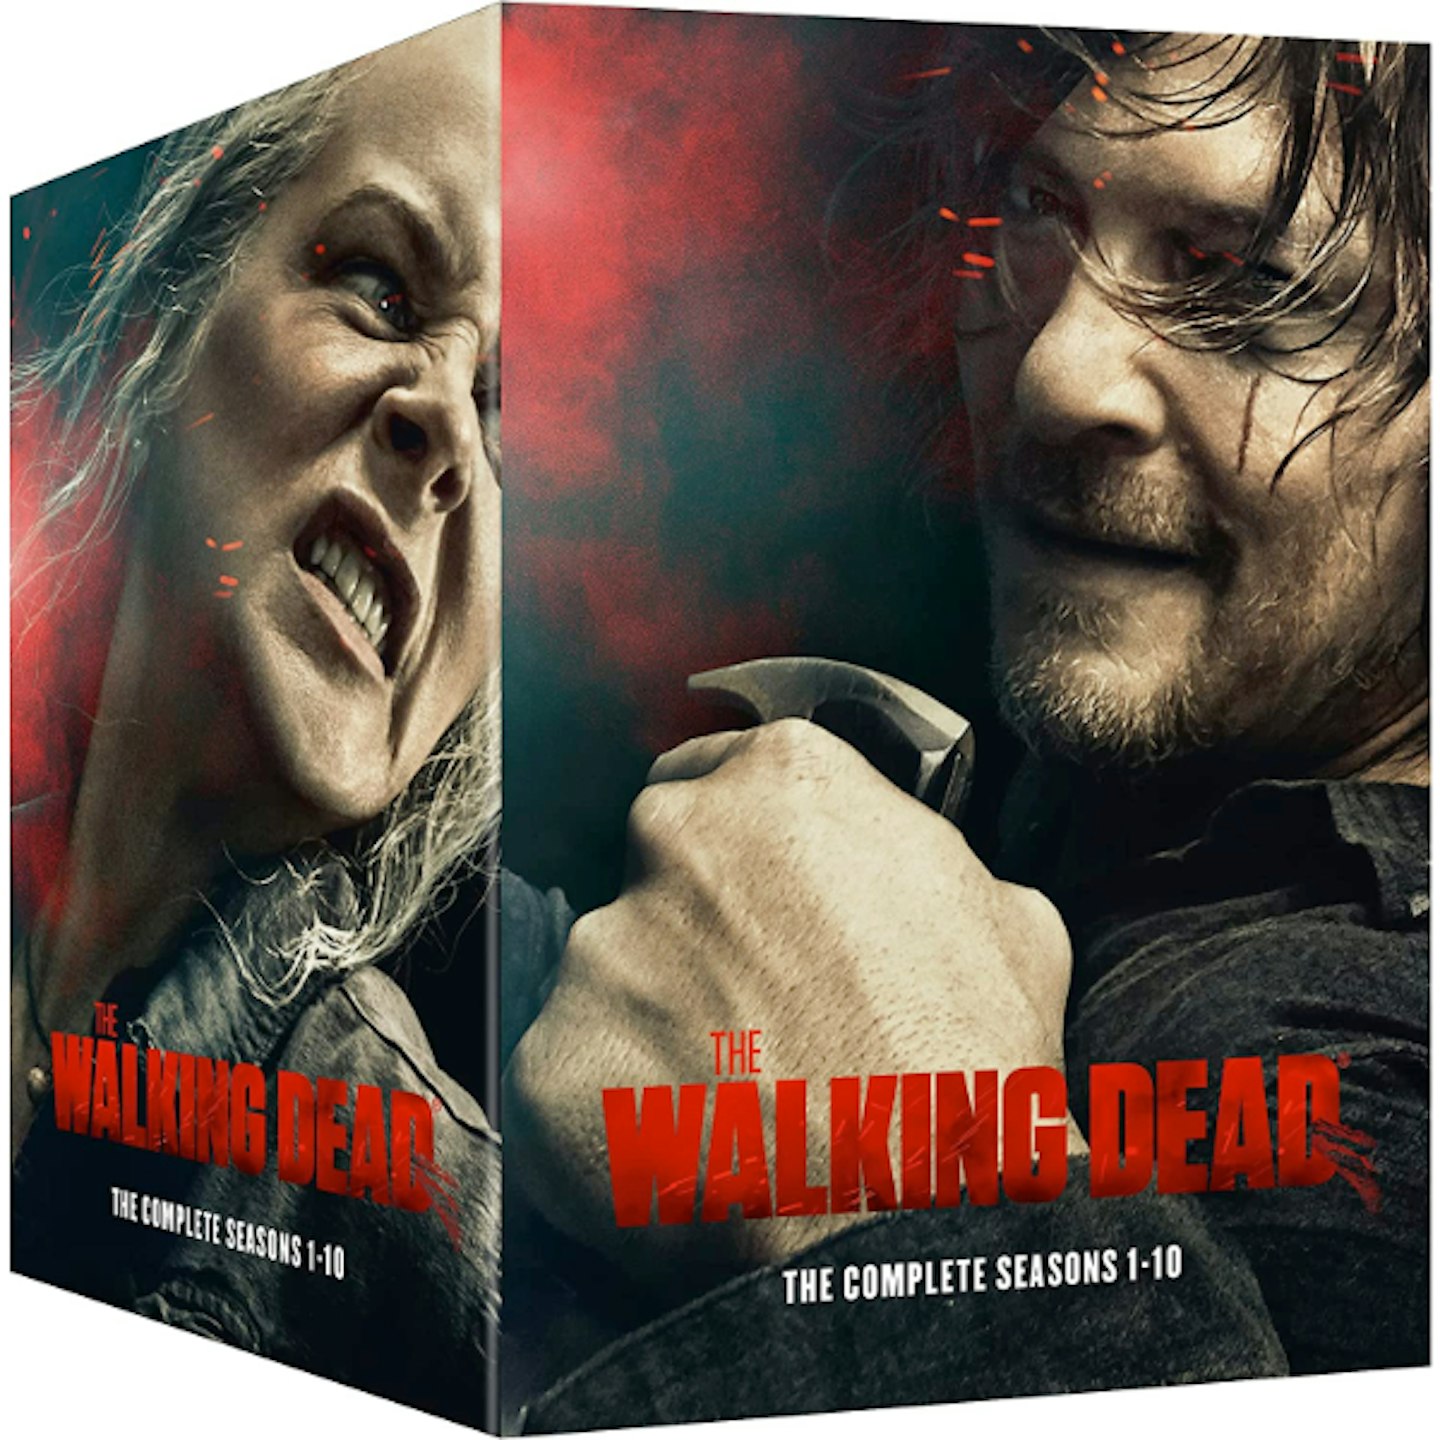 The Walking Dead The Complete Seasons 1-10